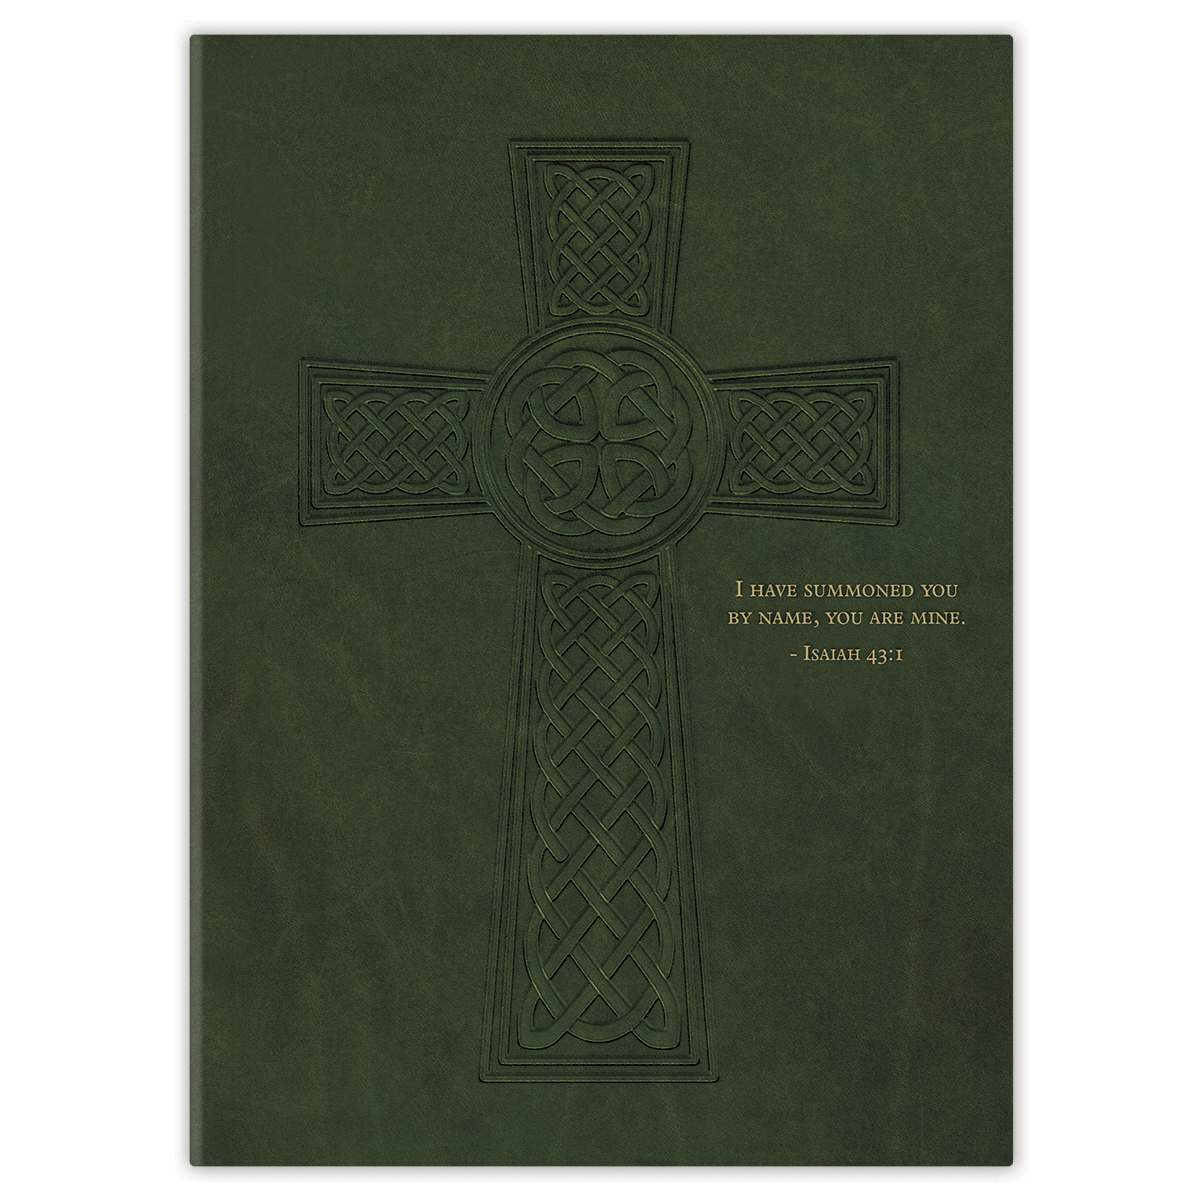 green celtic cross png